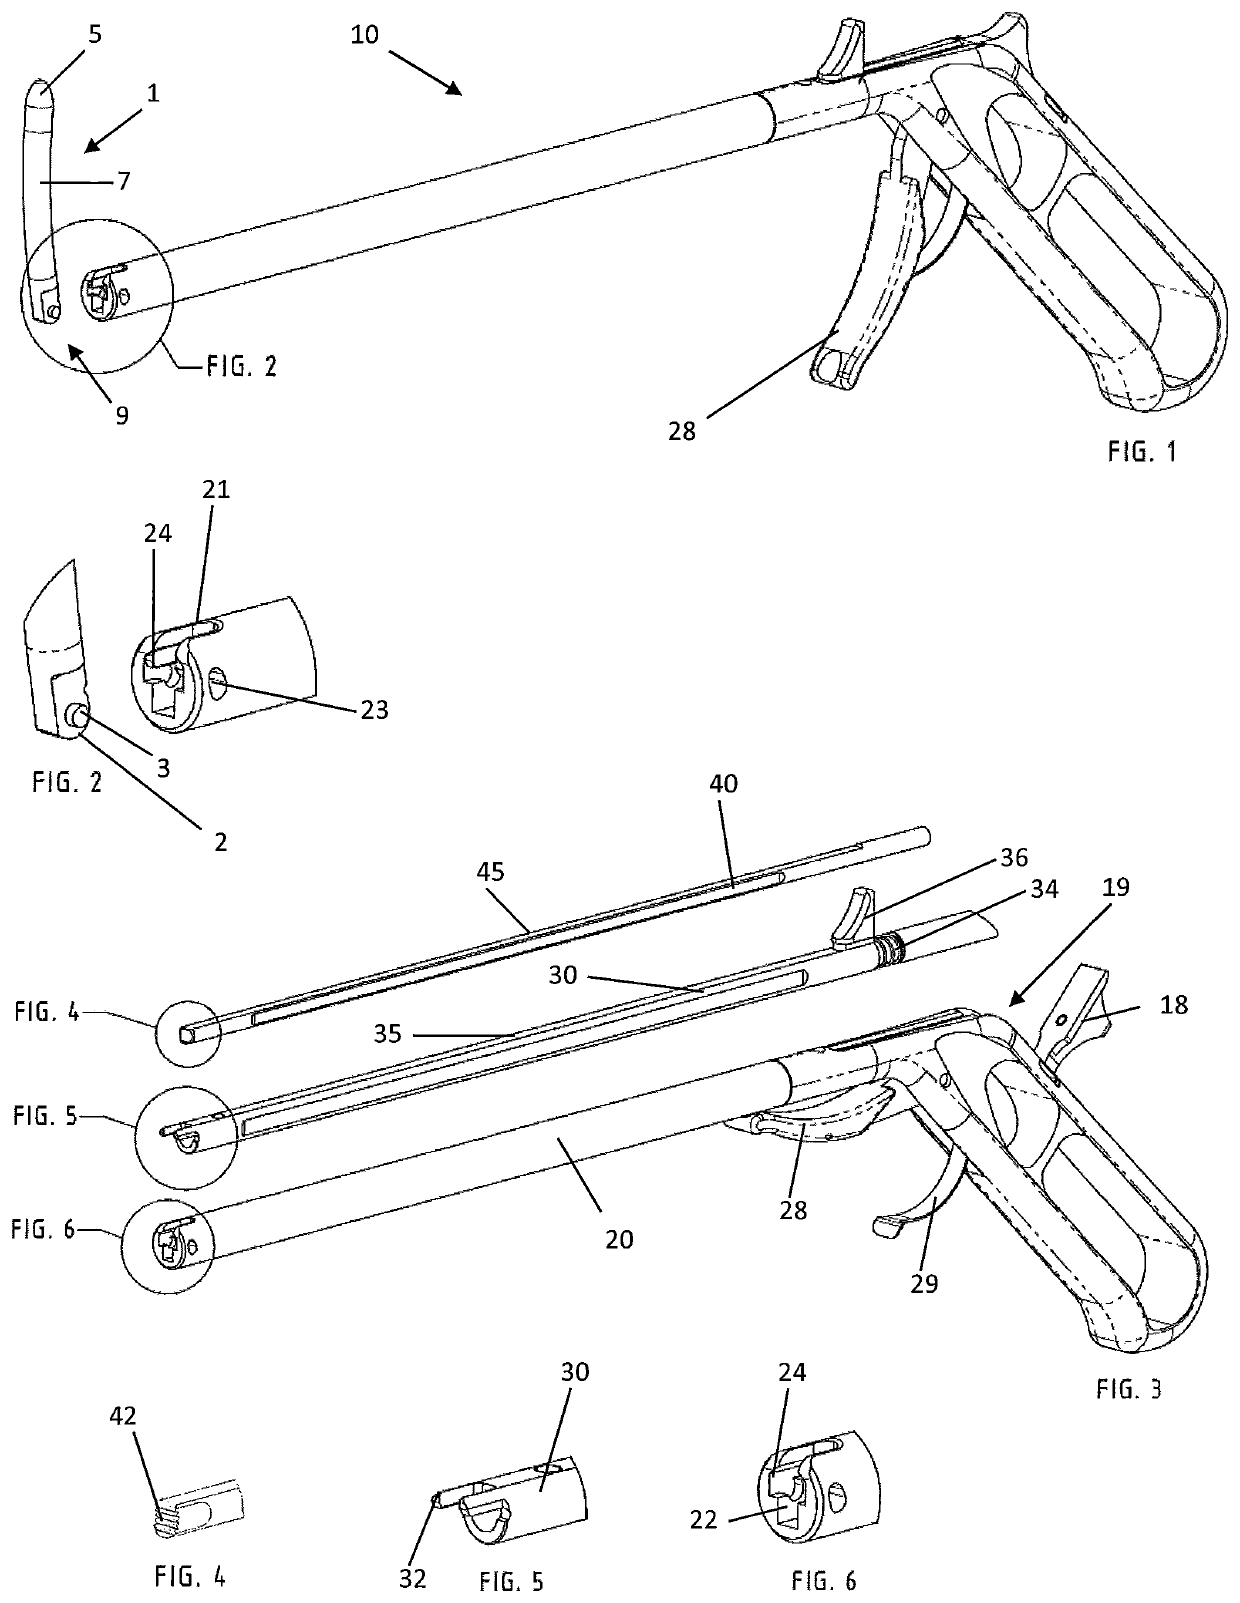 Rod insertion with adjustable rod angulation